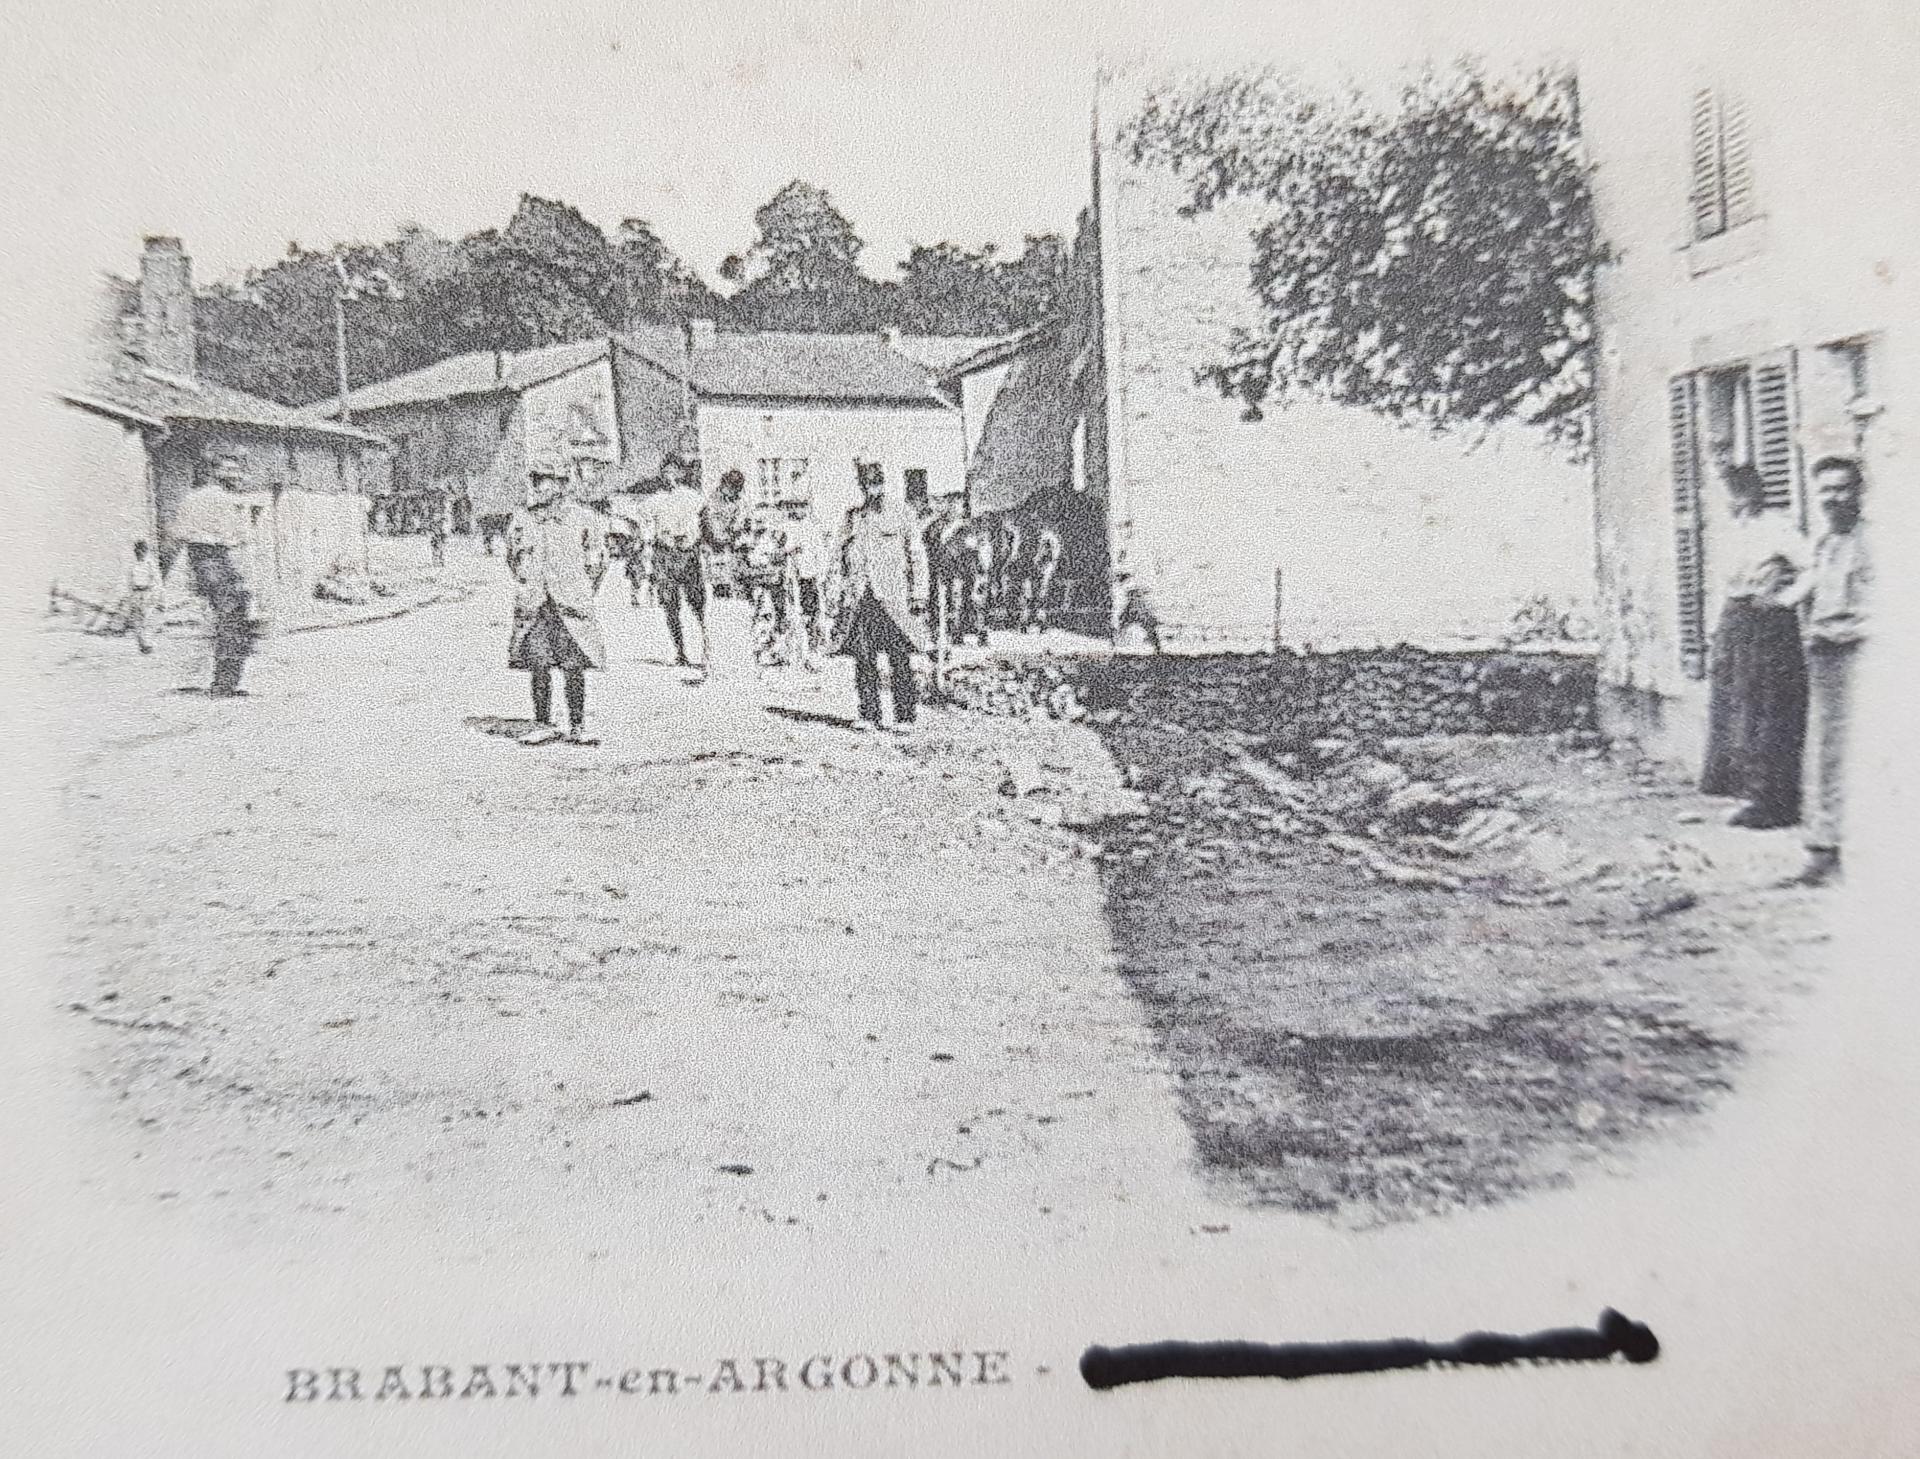 Brabant village